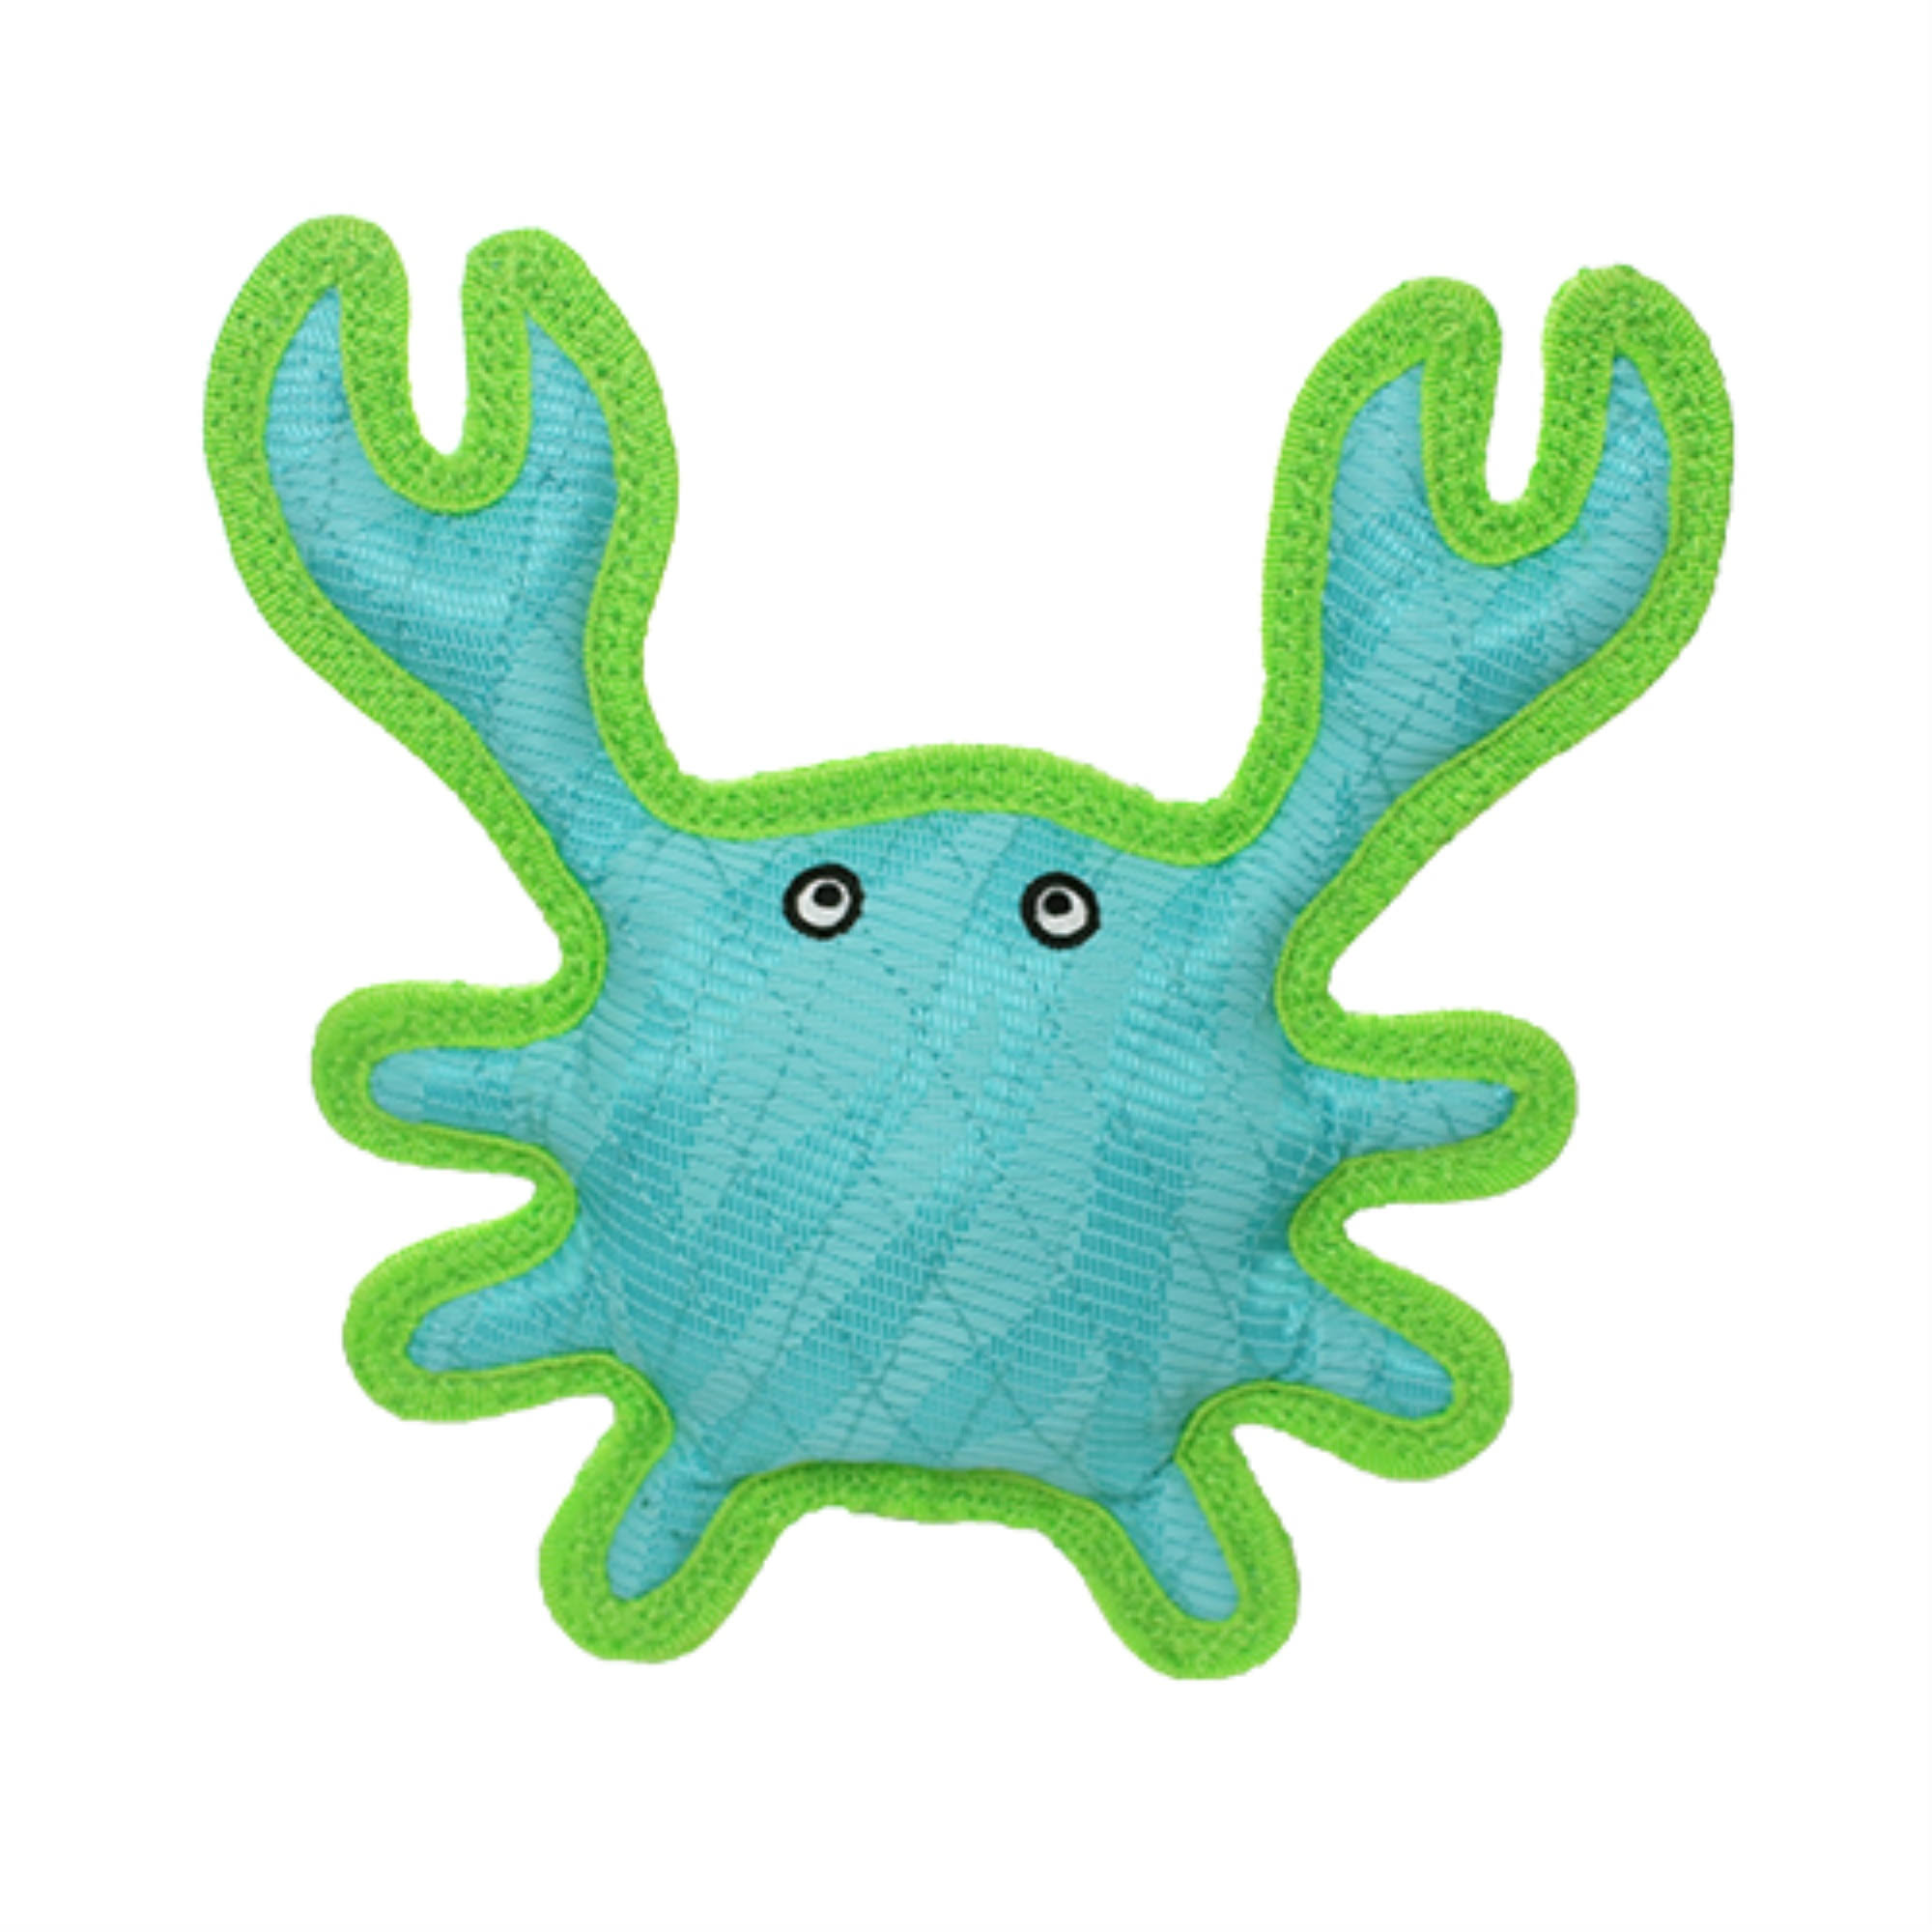 DuraForce Chew Toy Blue & Green Crab Dog Toy One-Size